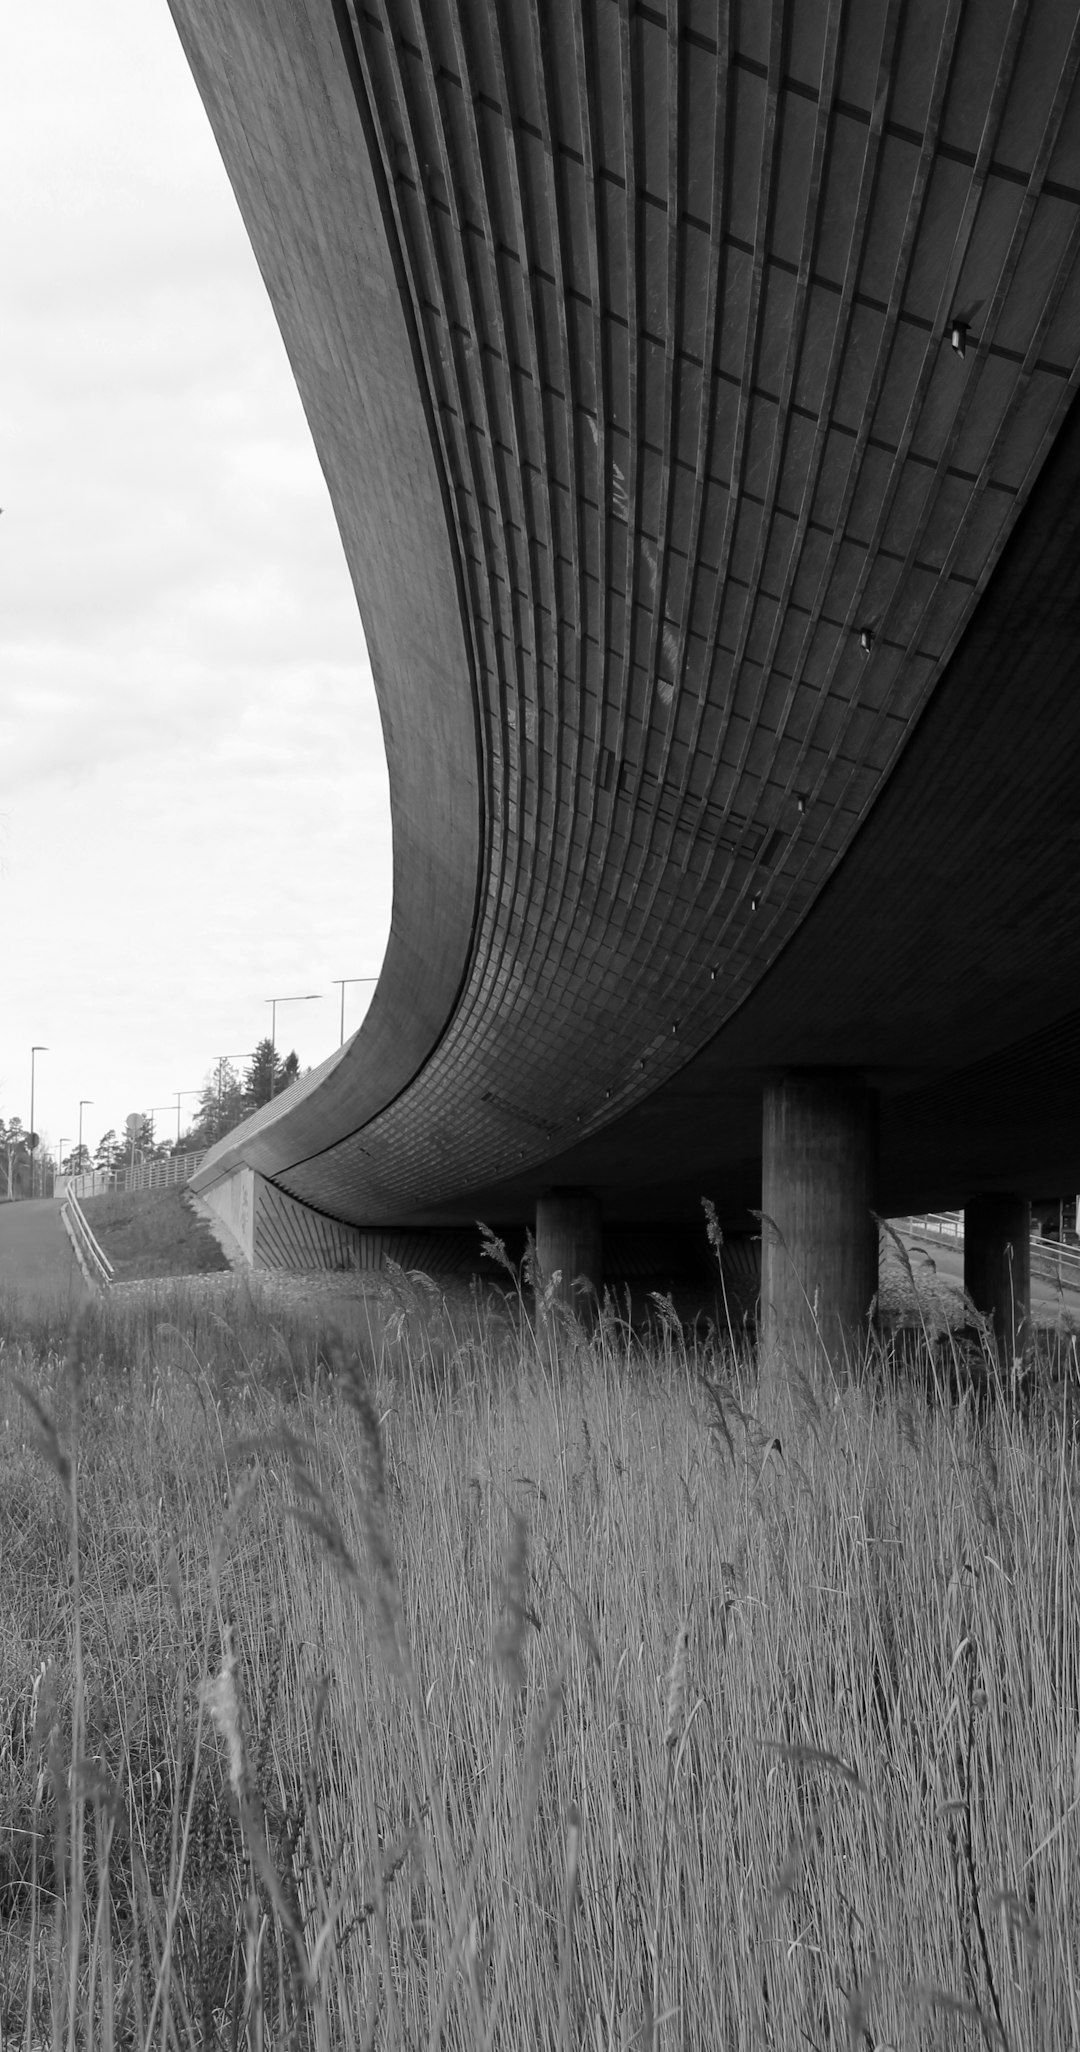 travelers stories about Bridge in Suomenoja, Finland